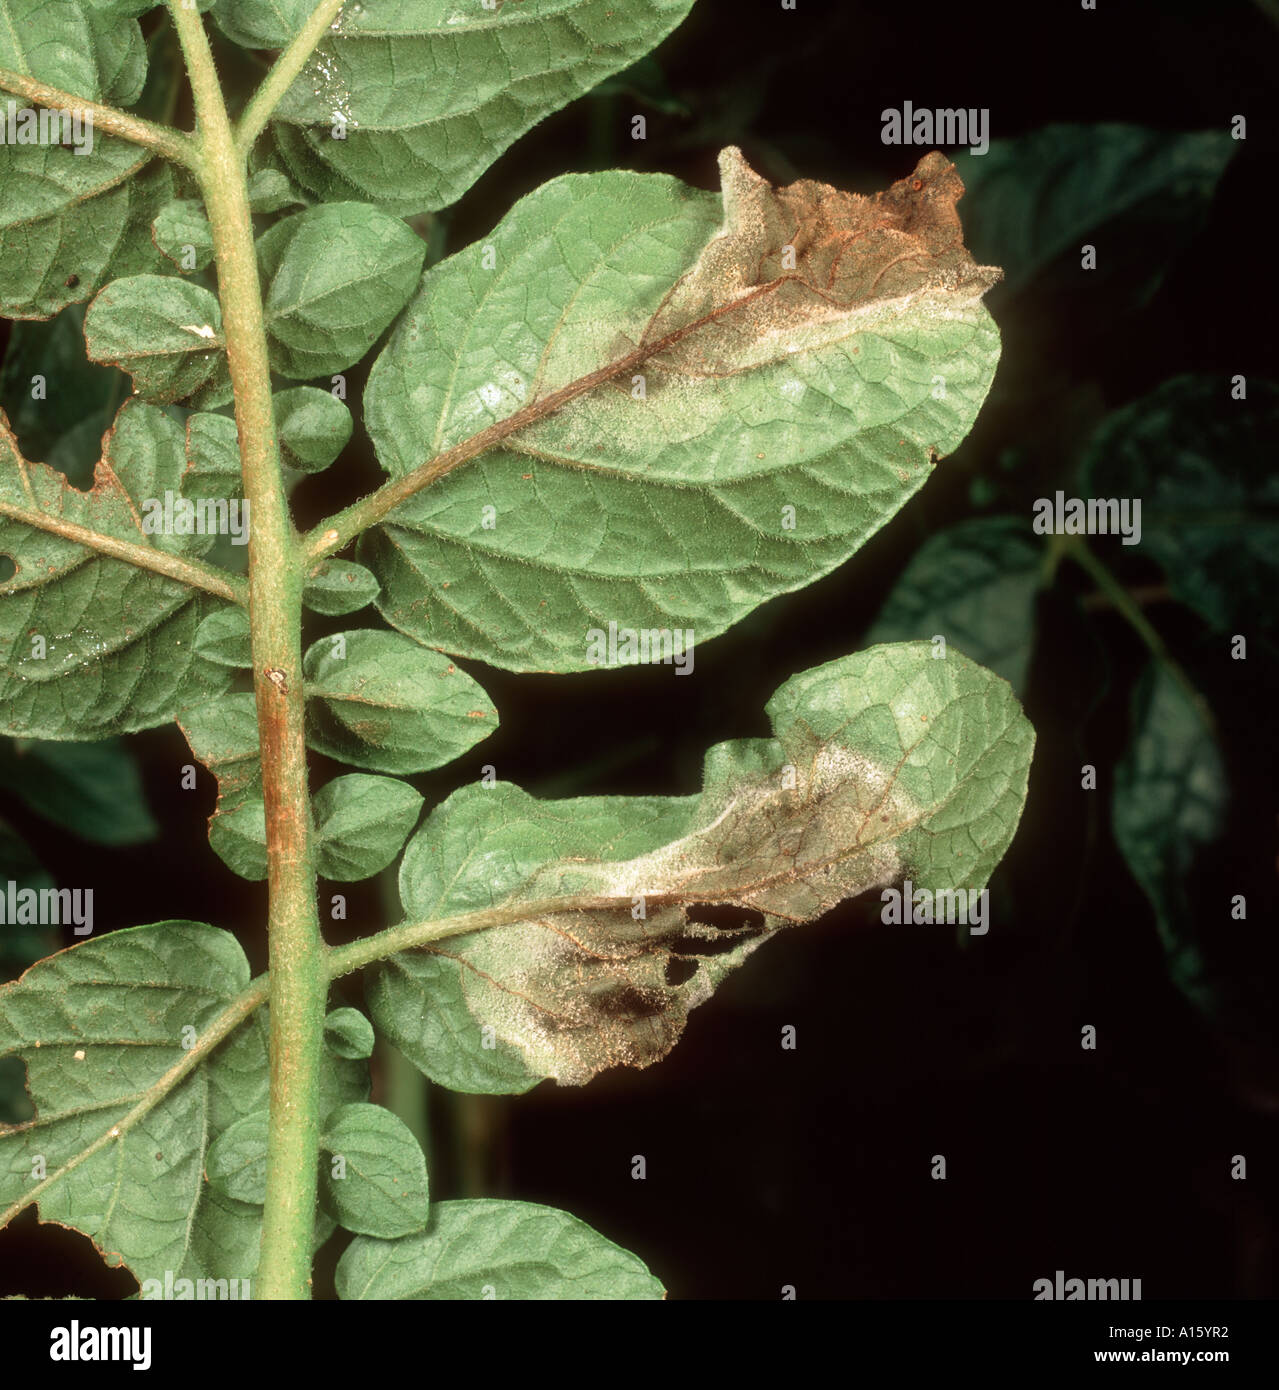 Potato late blight Phytophthora infestans mycelium and lesions on potato leaf underside Stock Photo